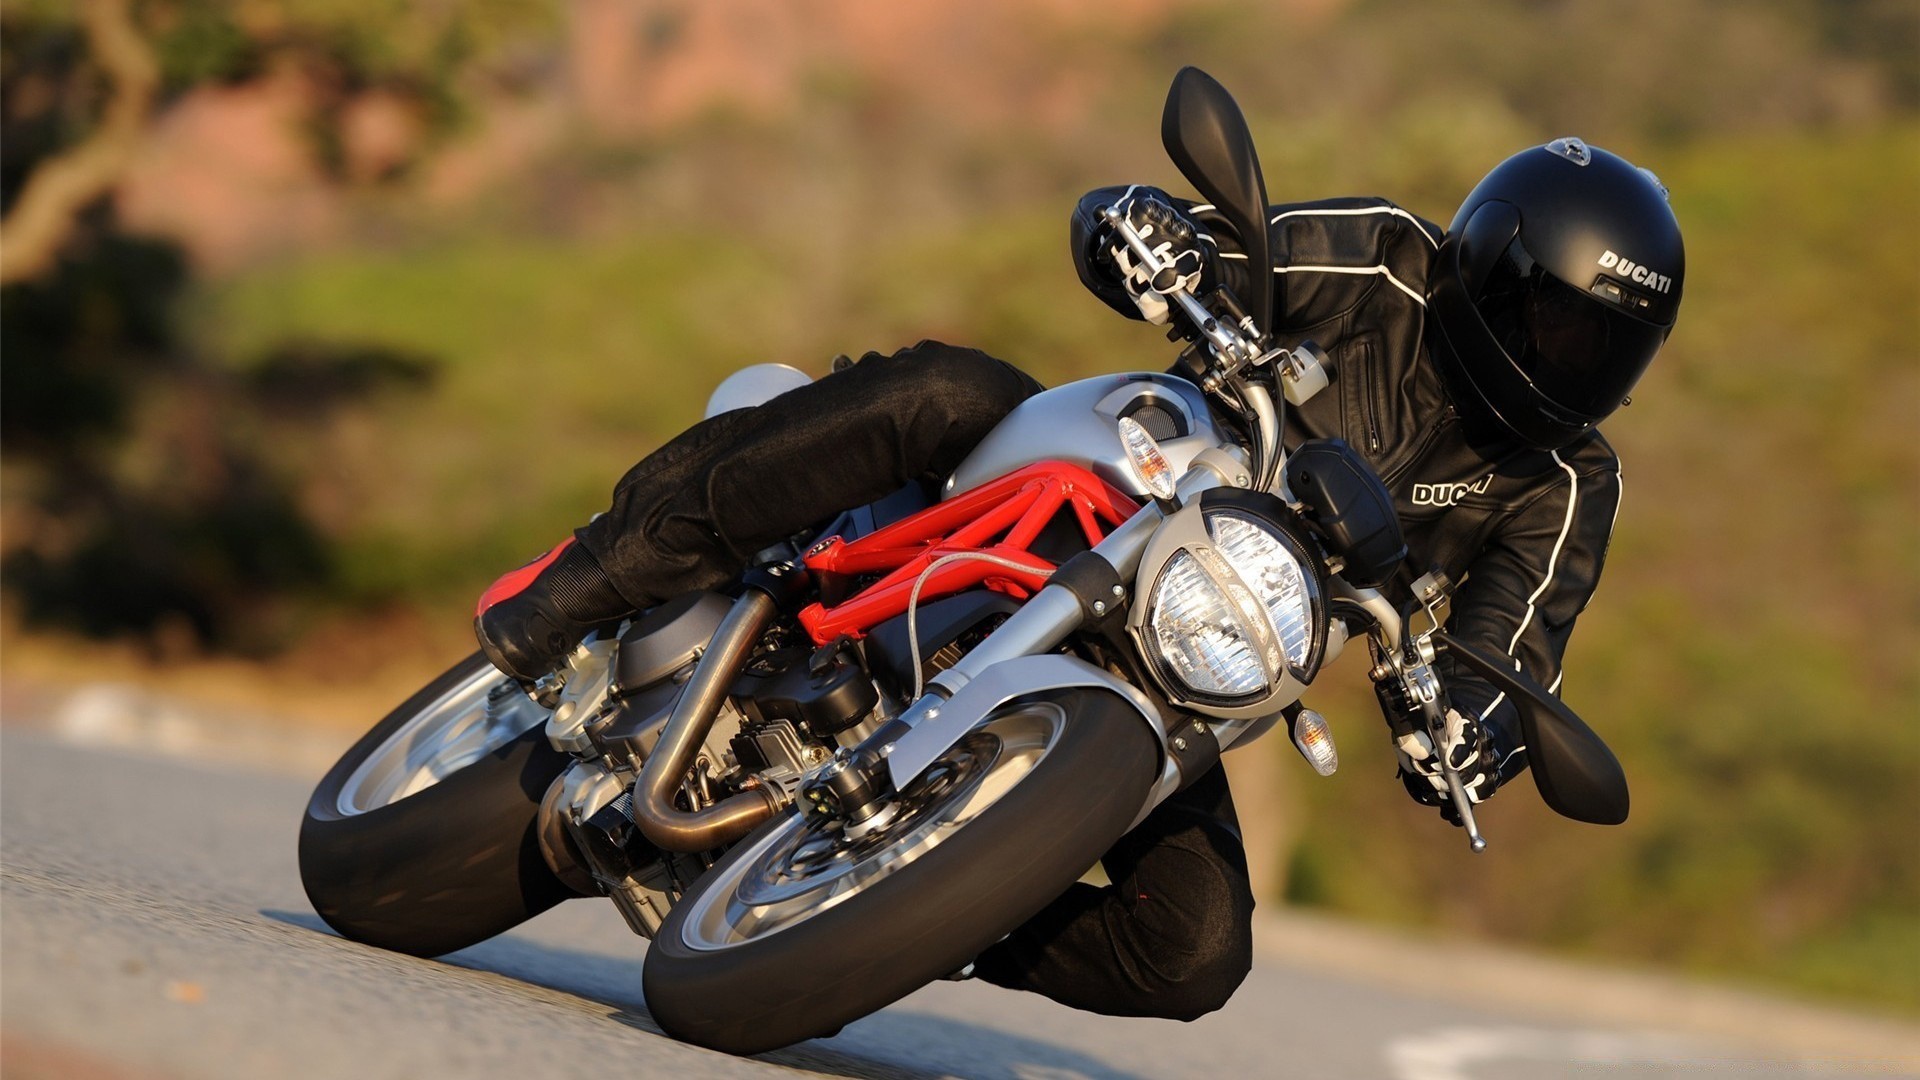 Мотоцикл Ducati бесплатно